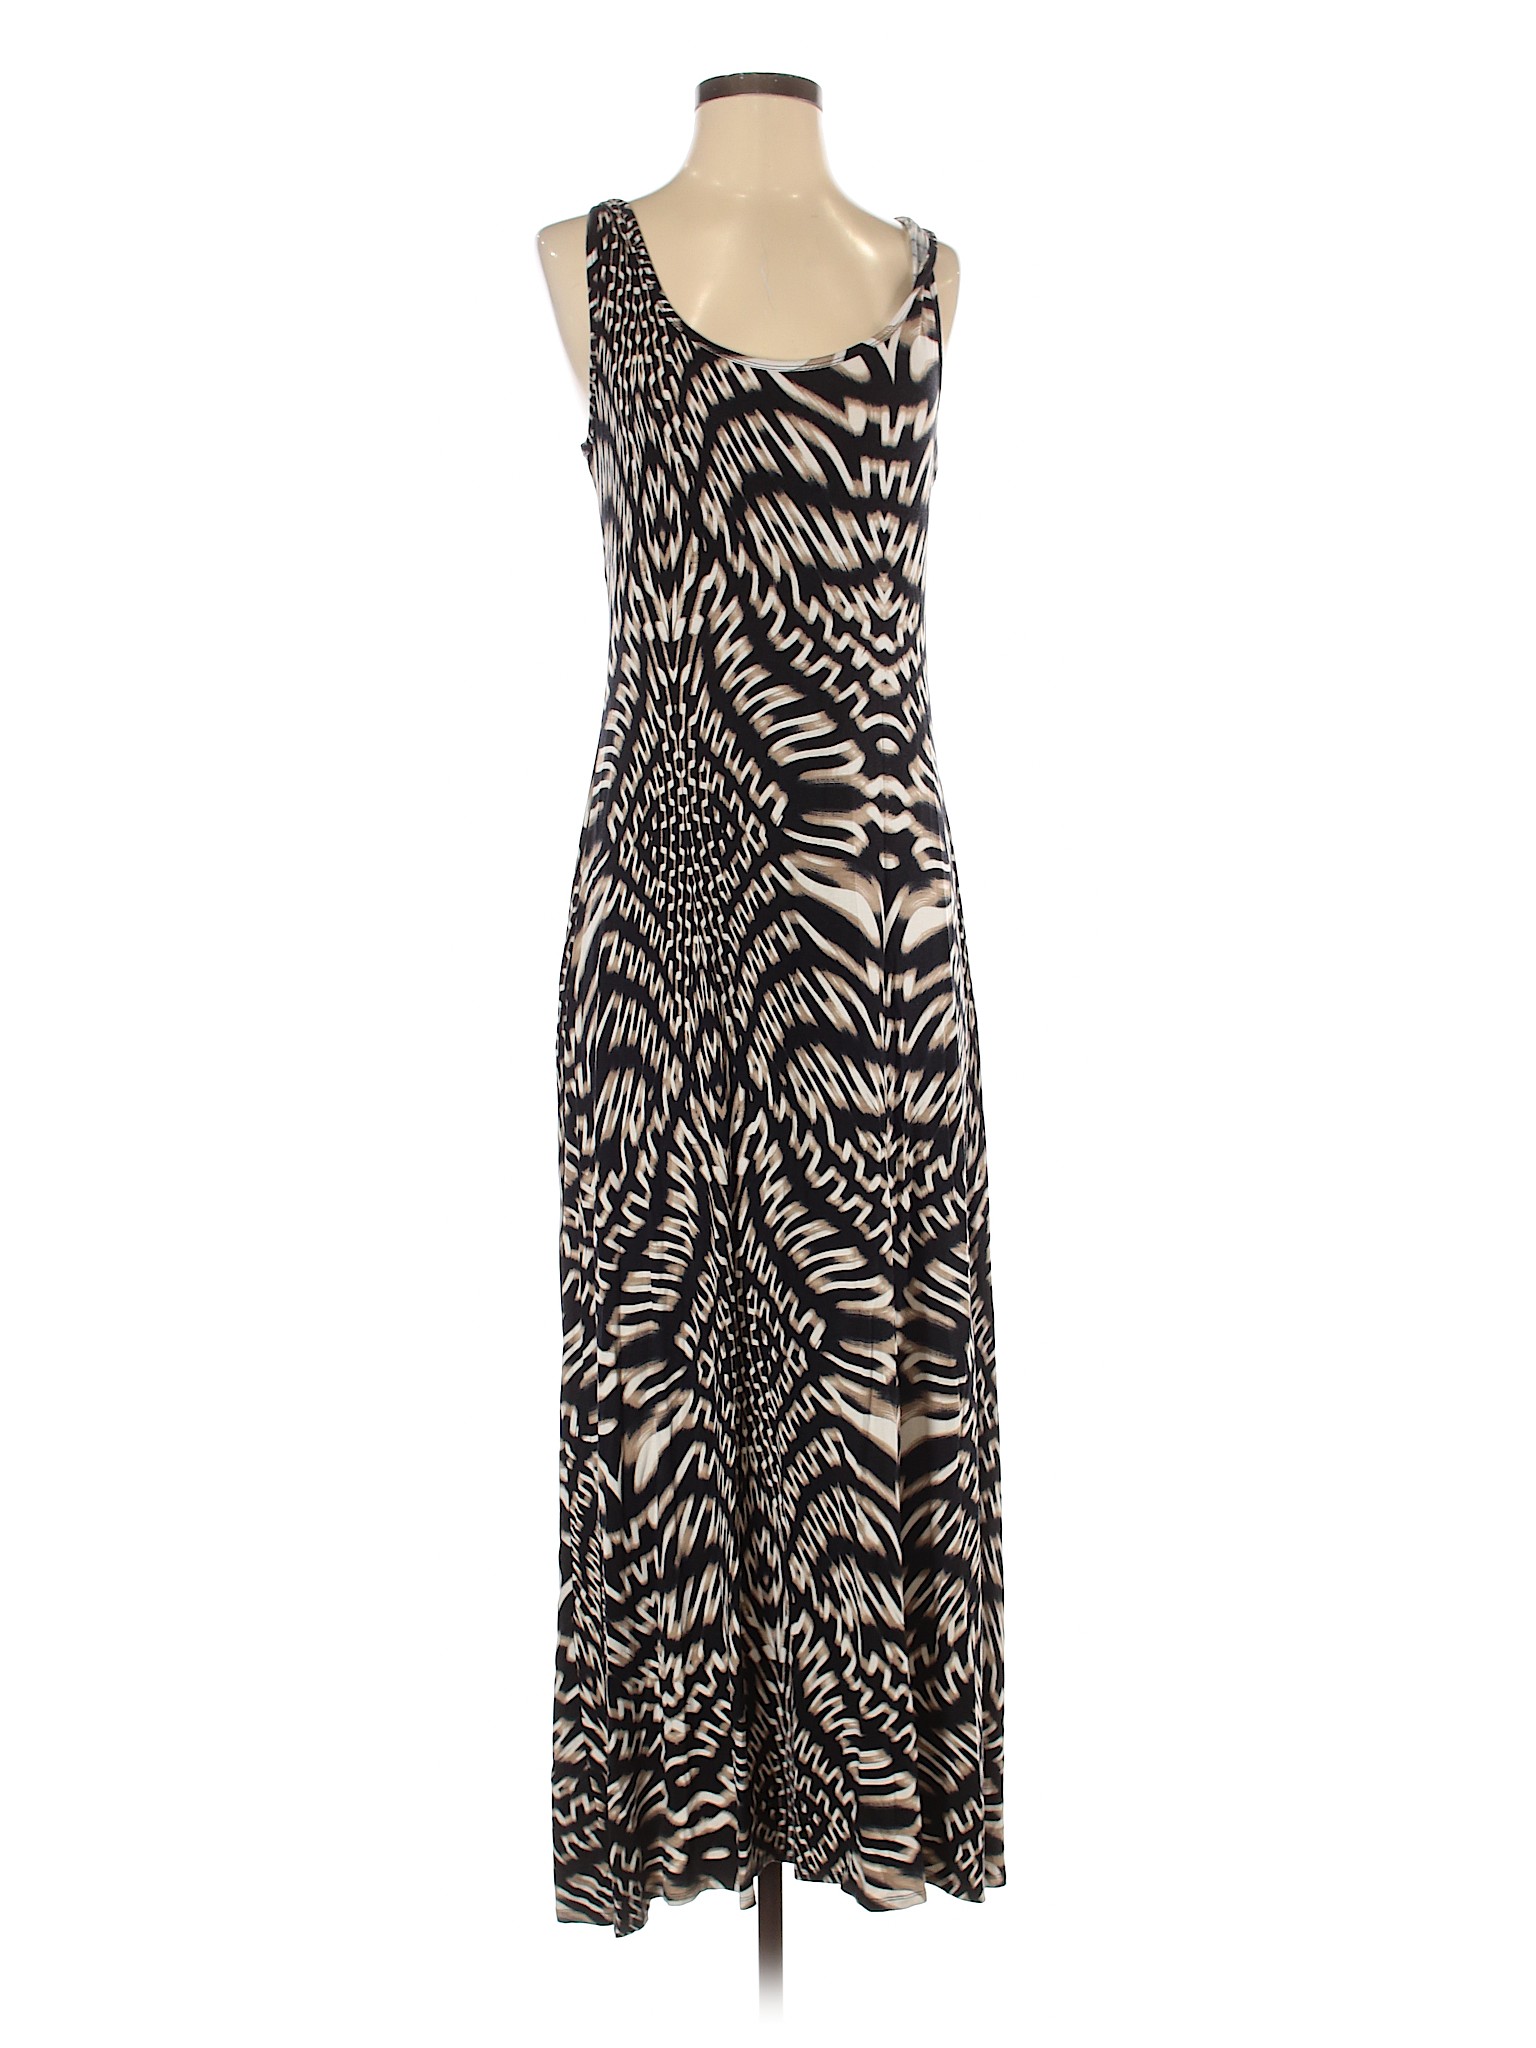 Calvin Klein Women Brown Casual Dress S | eBay